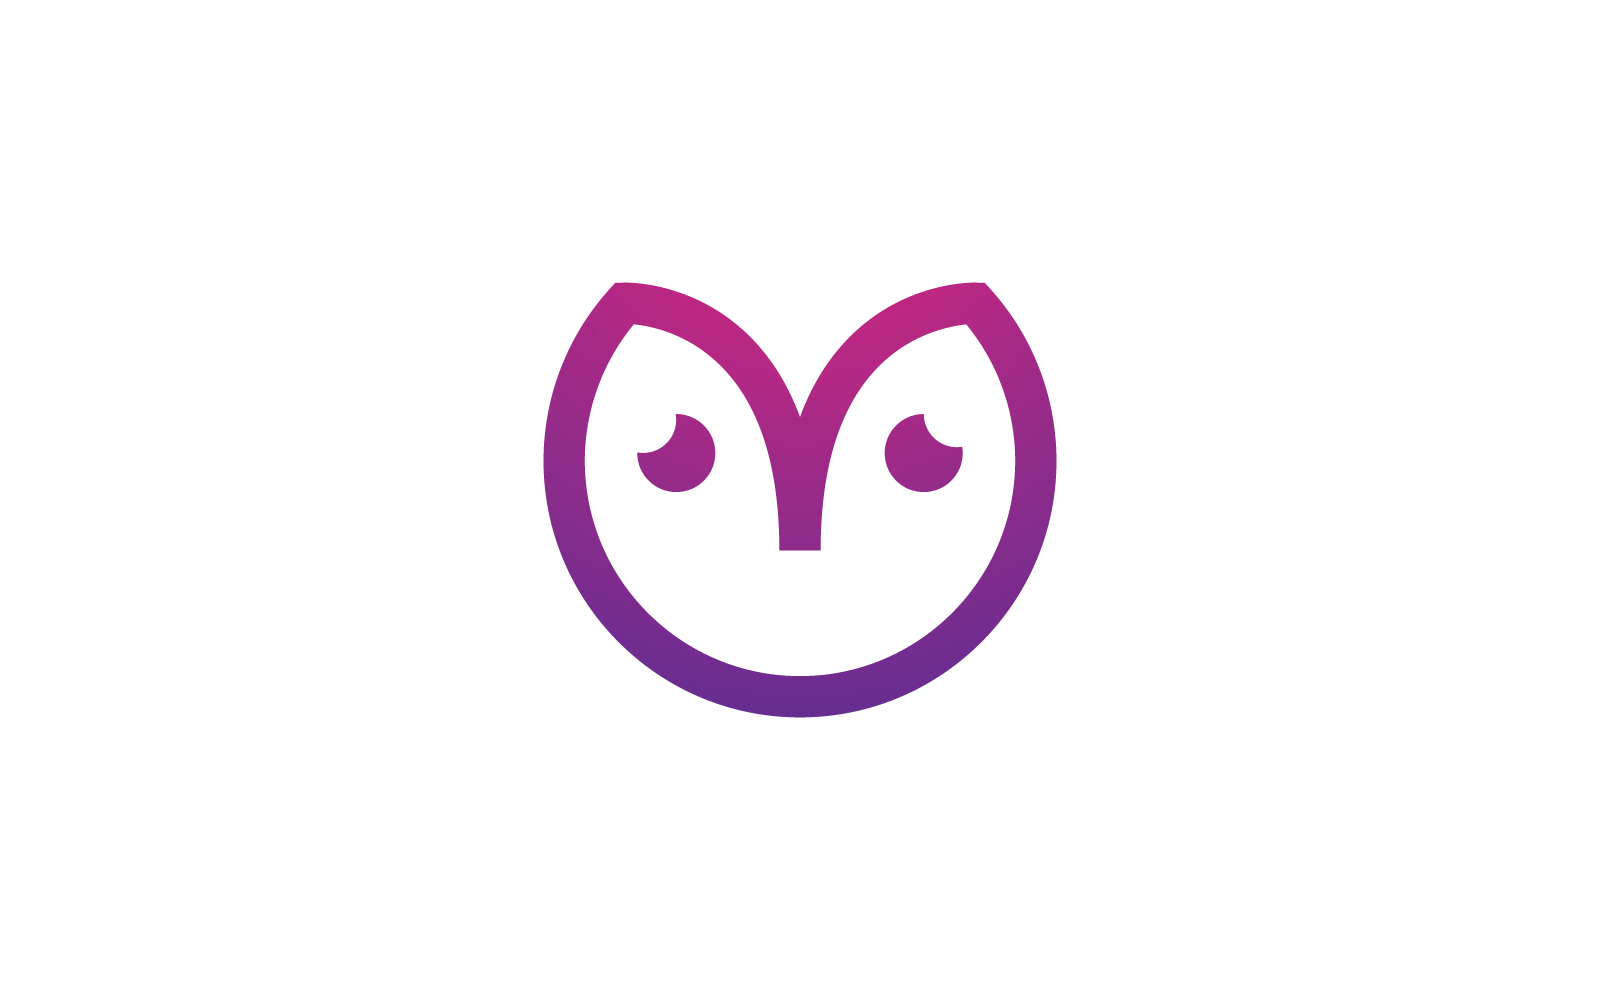 Owl logo illustration vector flat design